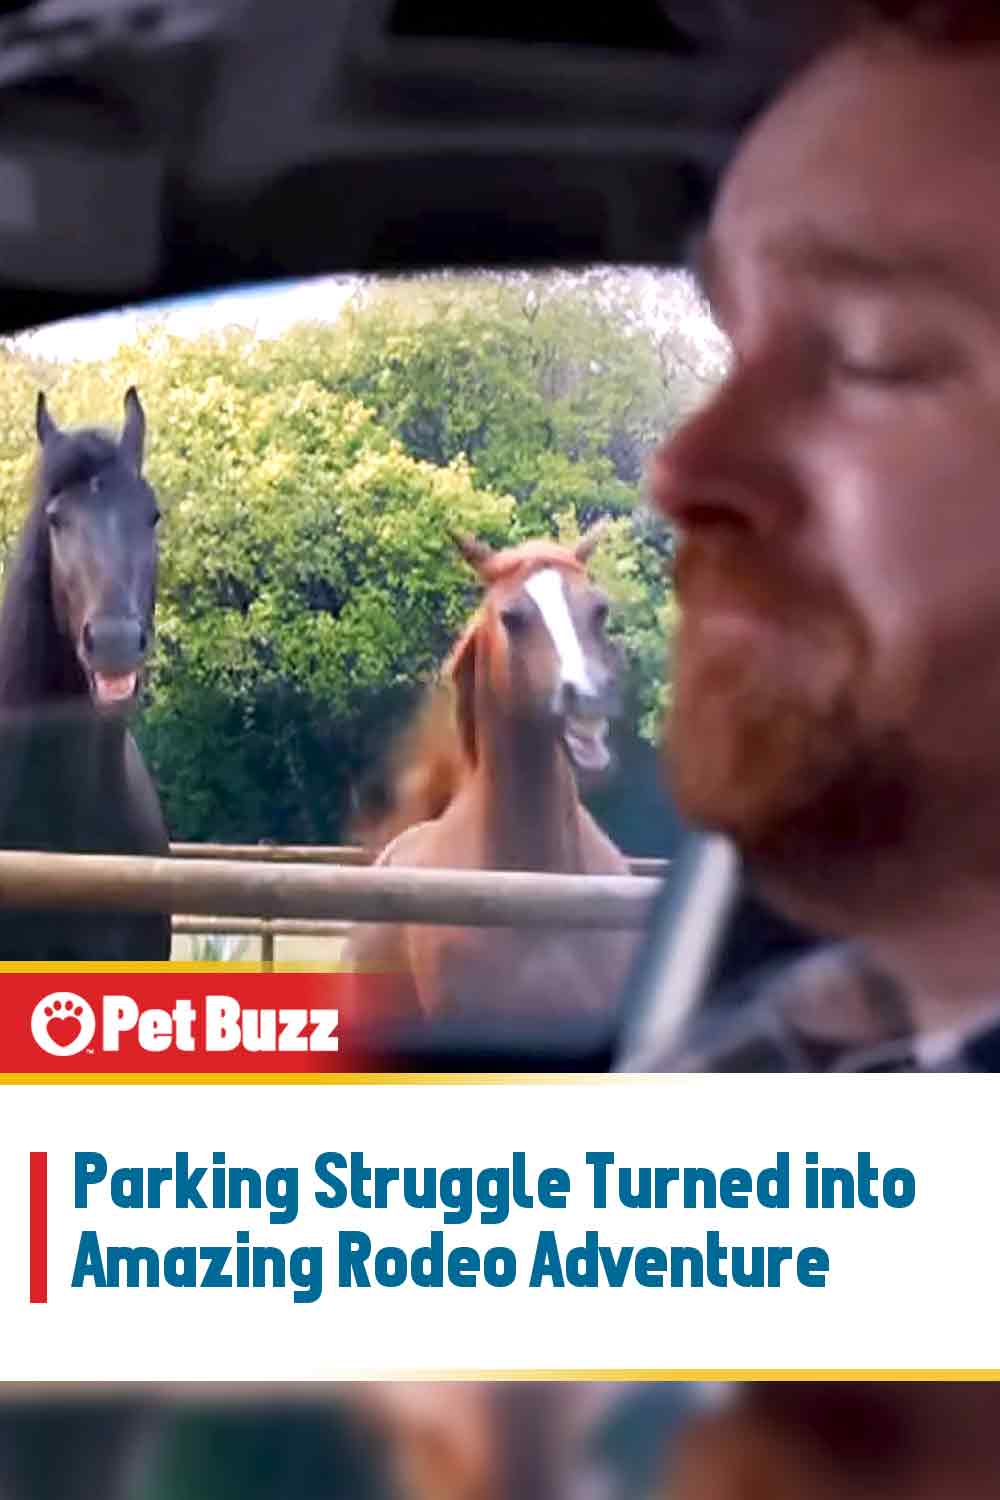 Parking Struggle Turned into Amazing Rodeo Adventure